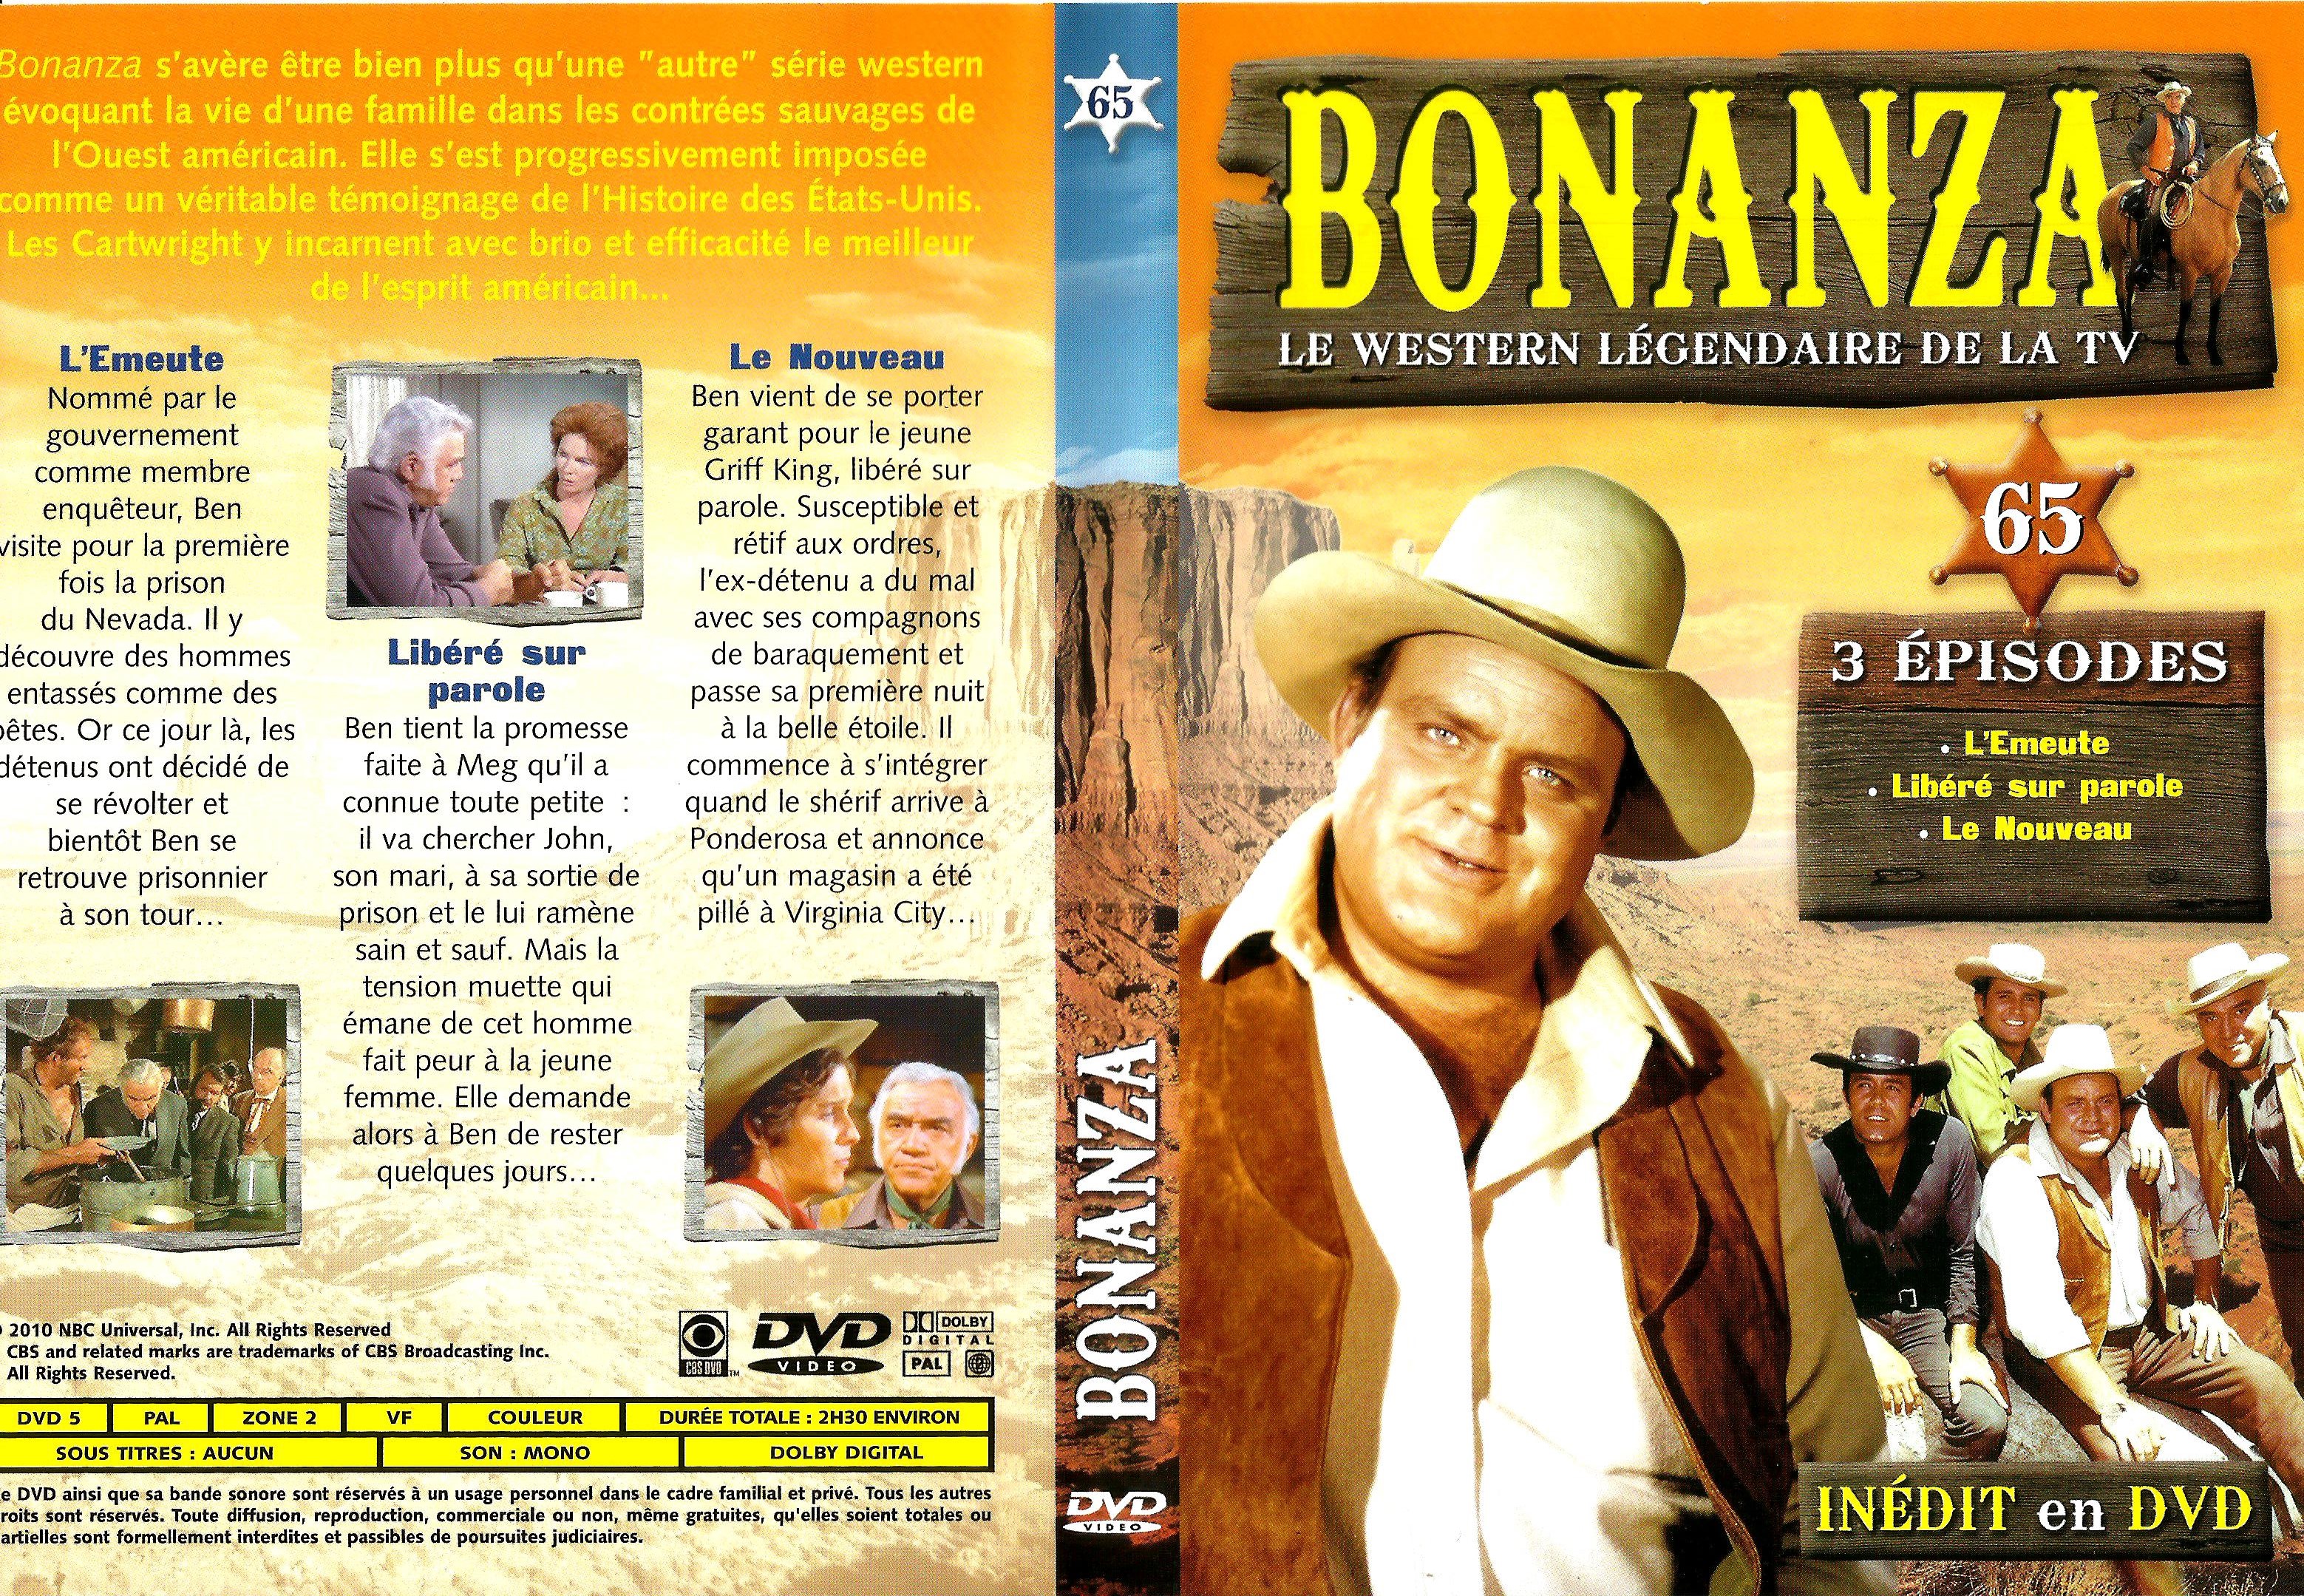 Jaquette DVD Bonanza vol 65